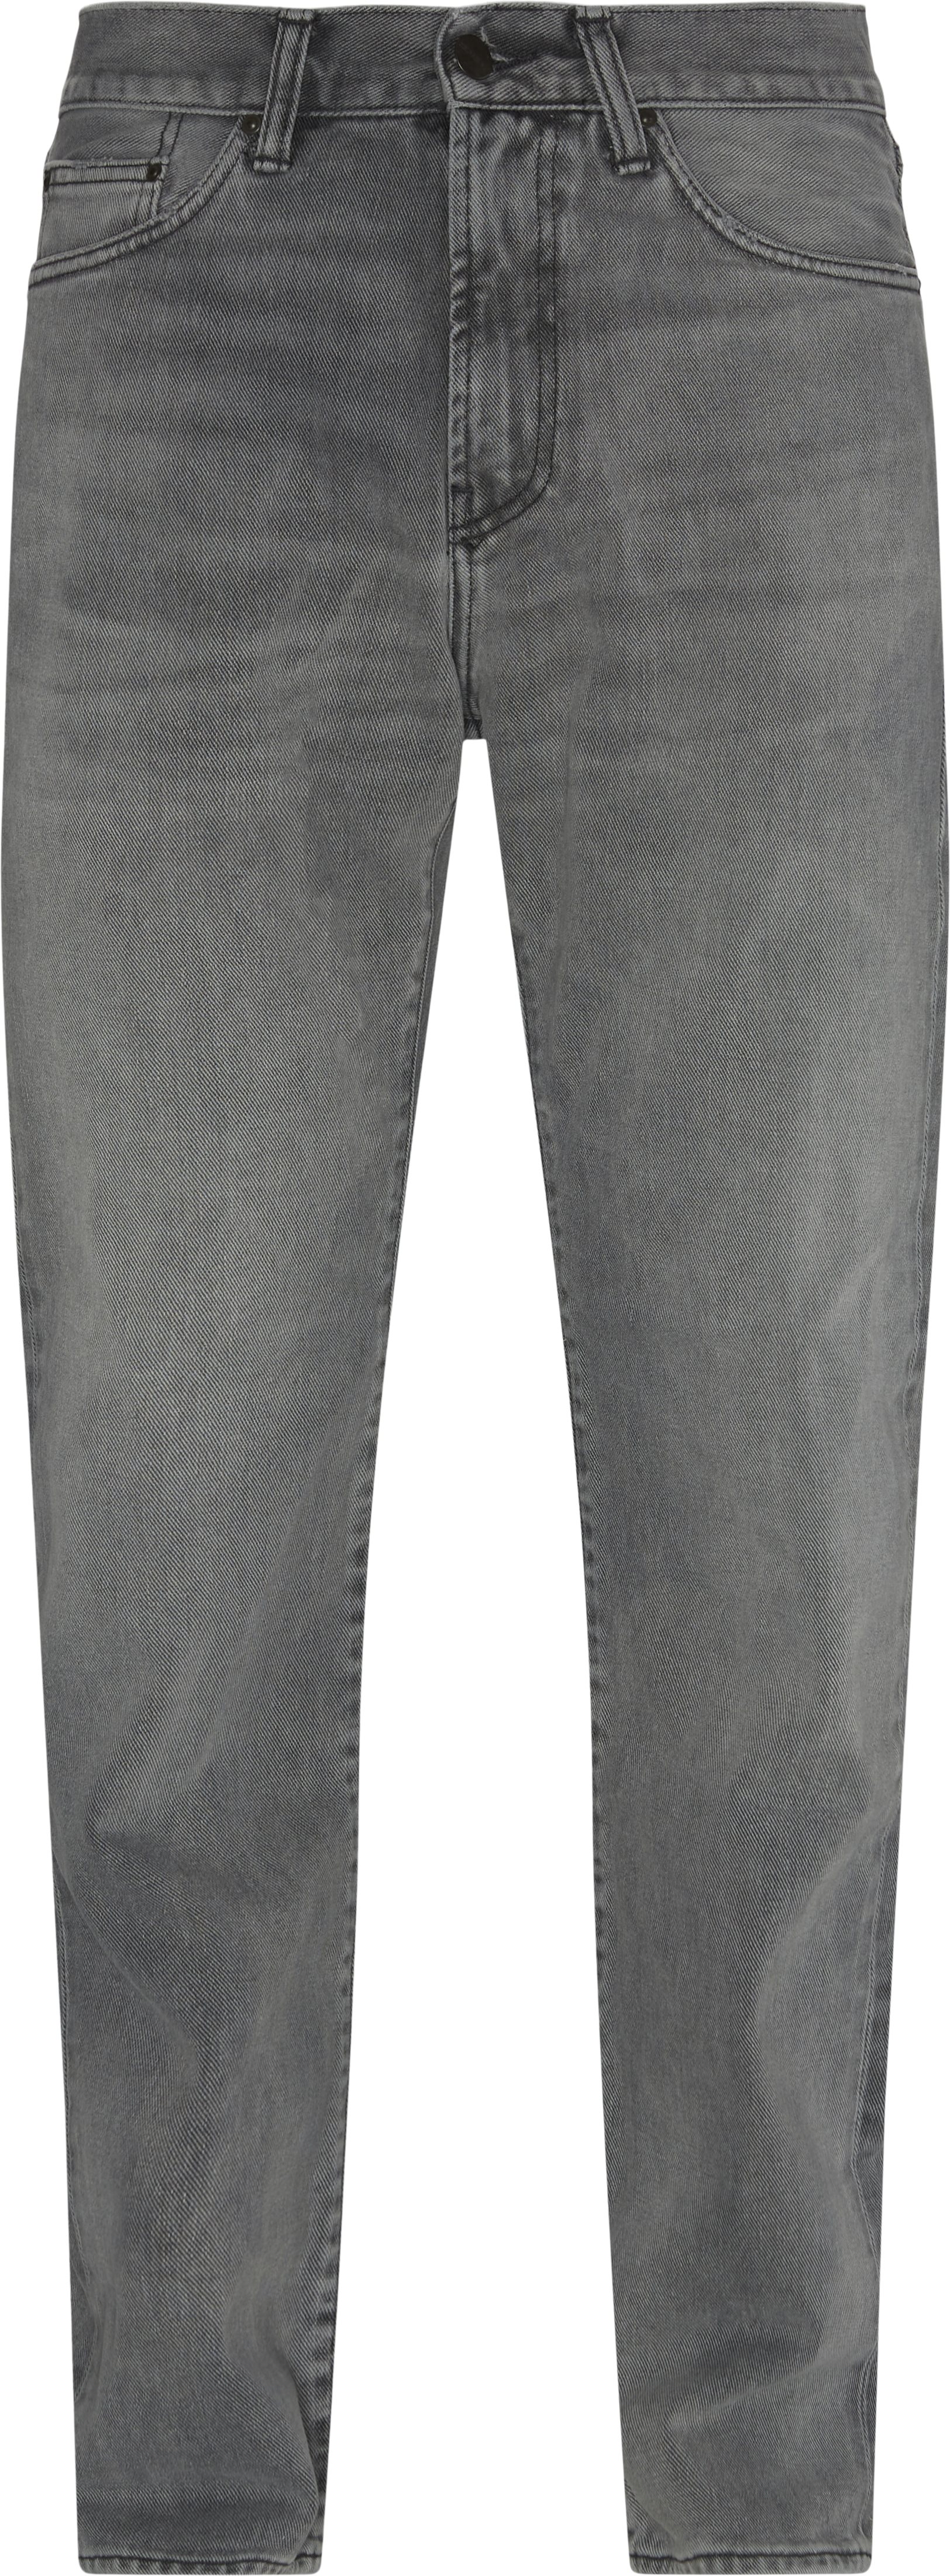 Pontiac Pant I027231 - Jeans - Straight fit - Black